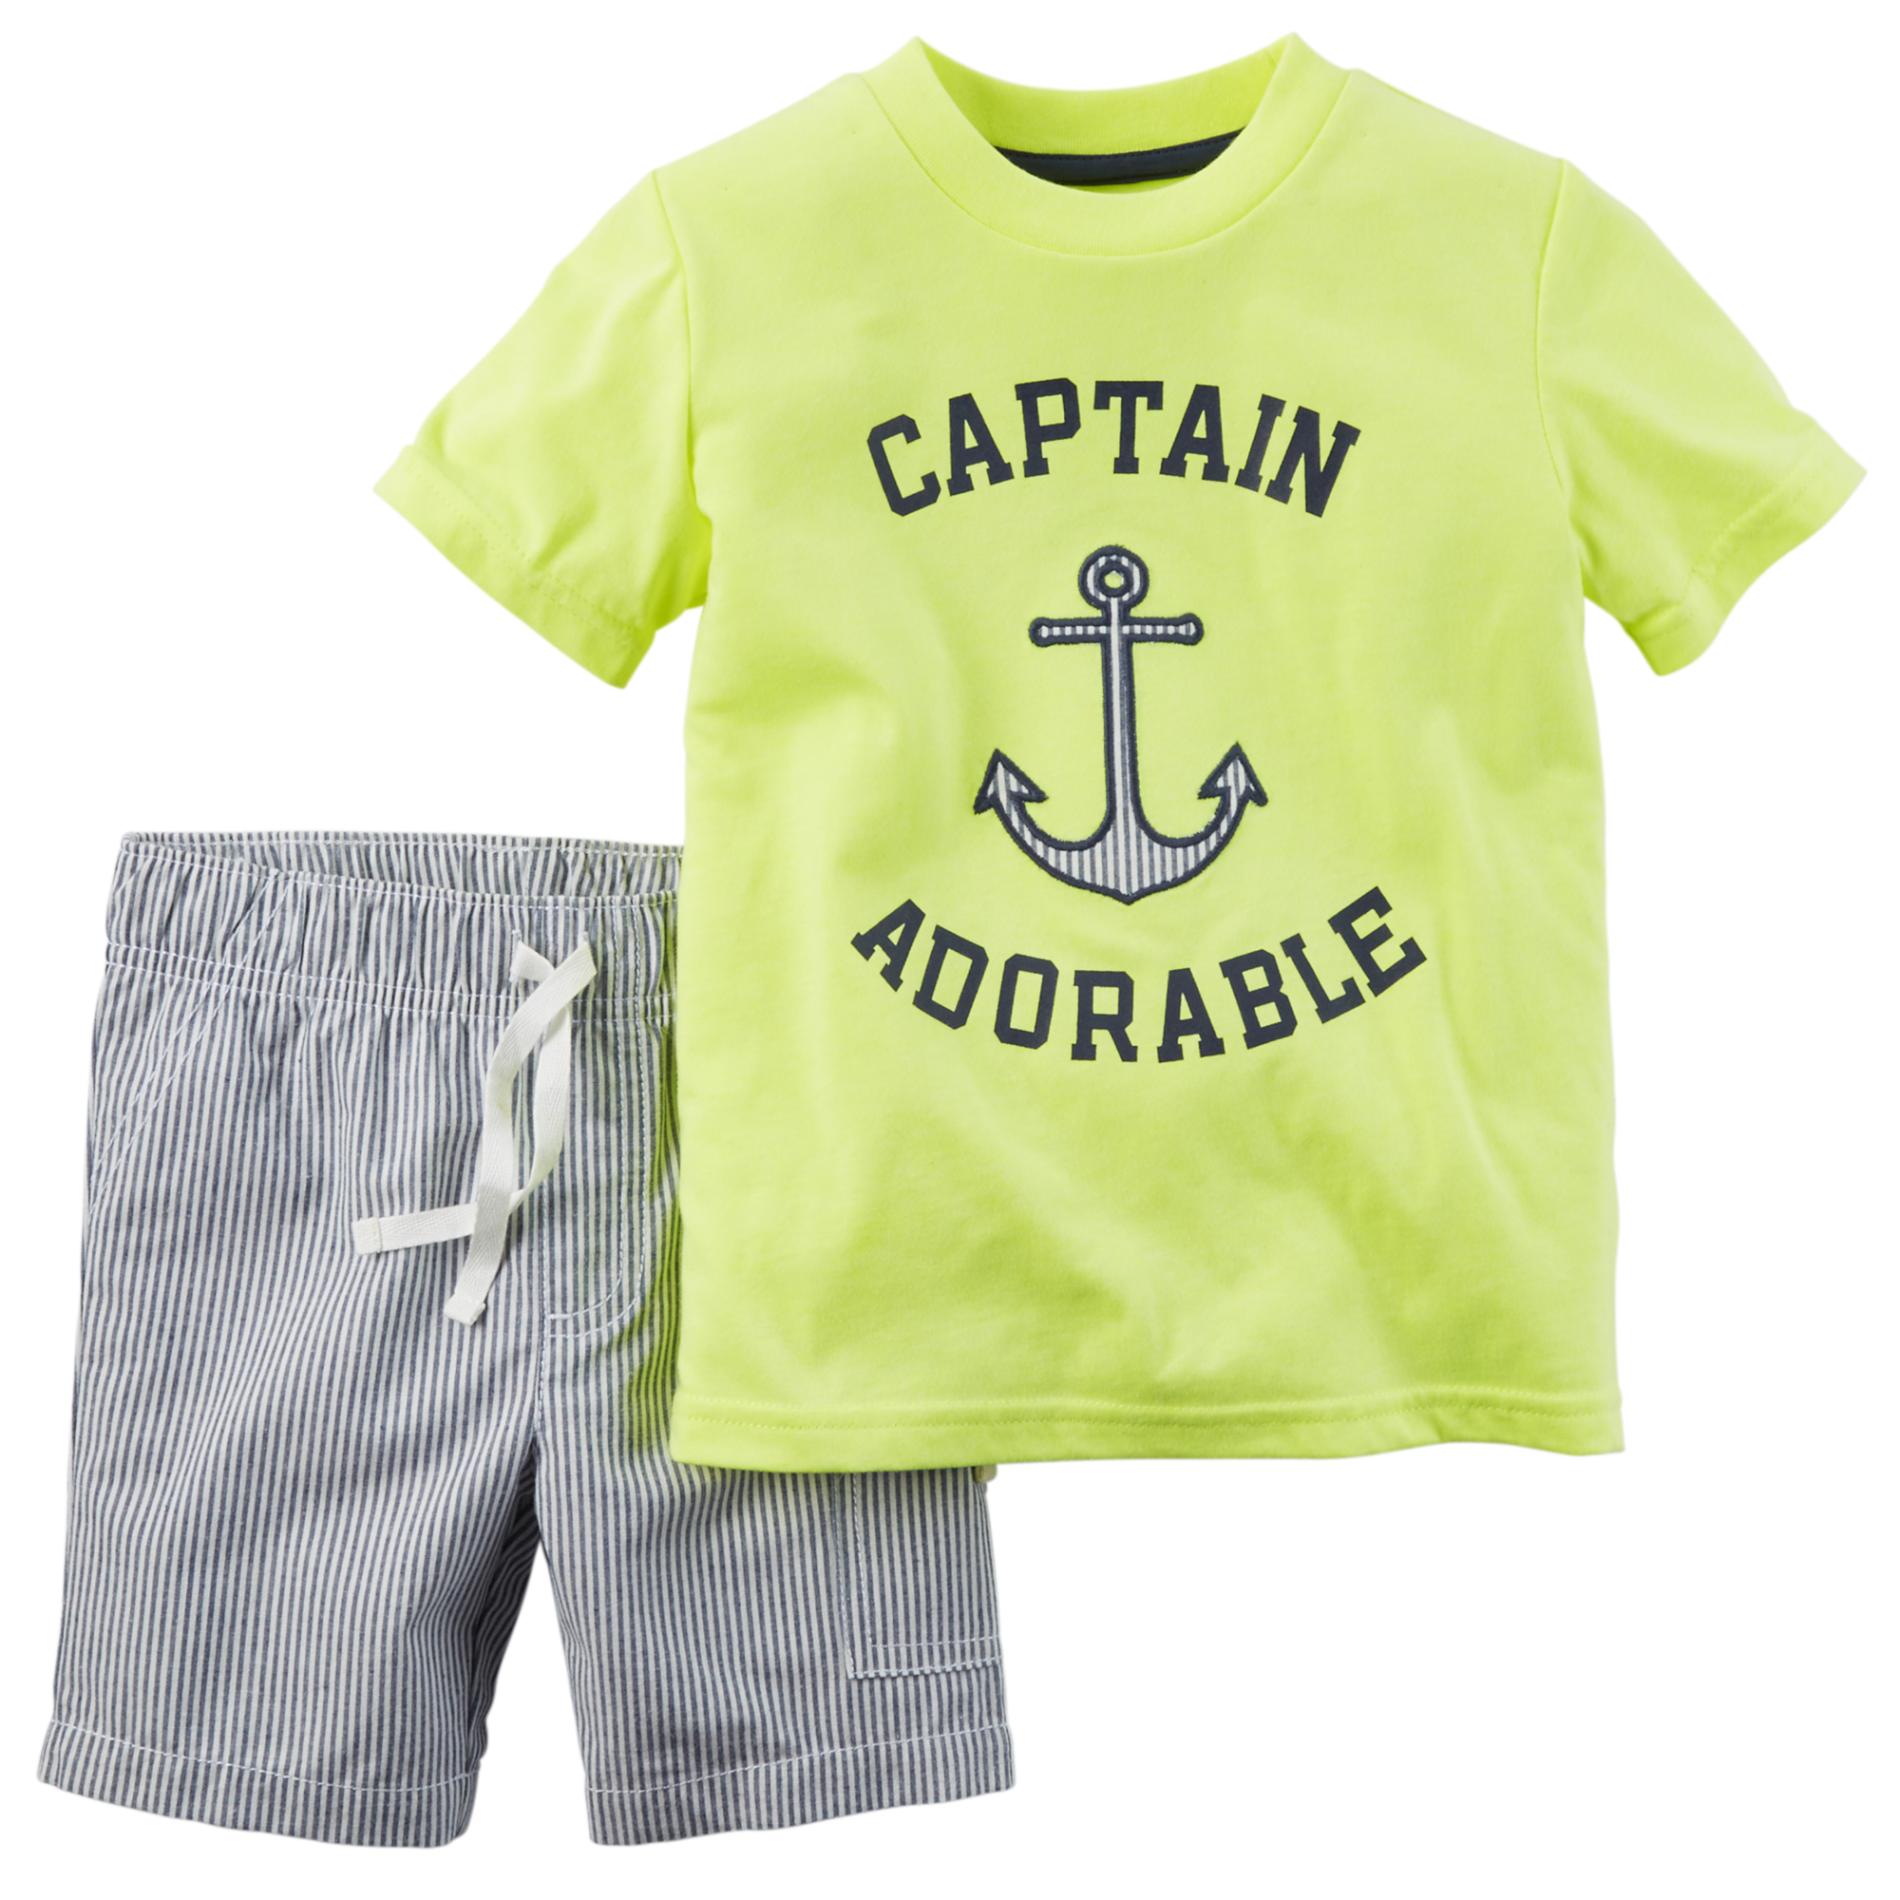 Carter's Newborn, Infant & Toddler Boy's Graphic T-Shirt & Shorts - Captain Adorable